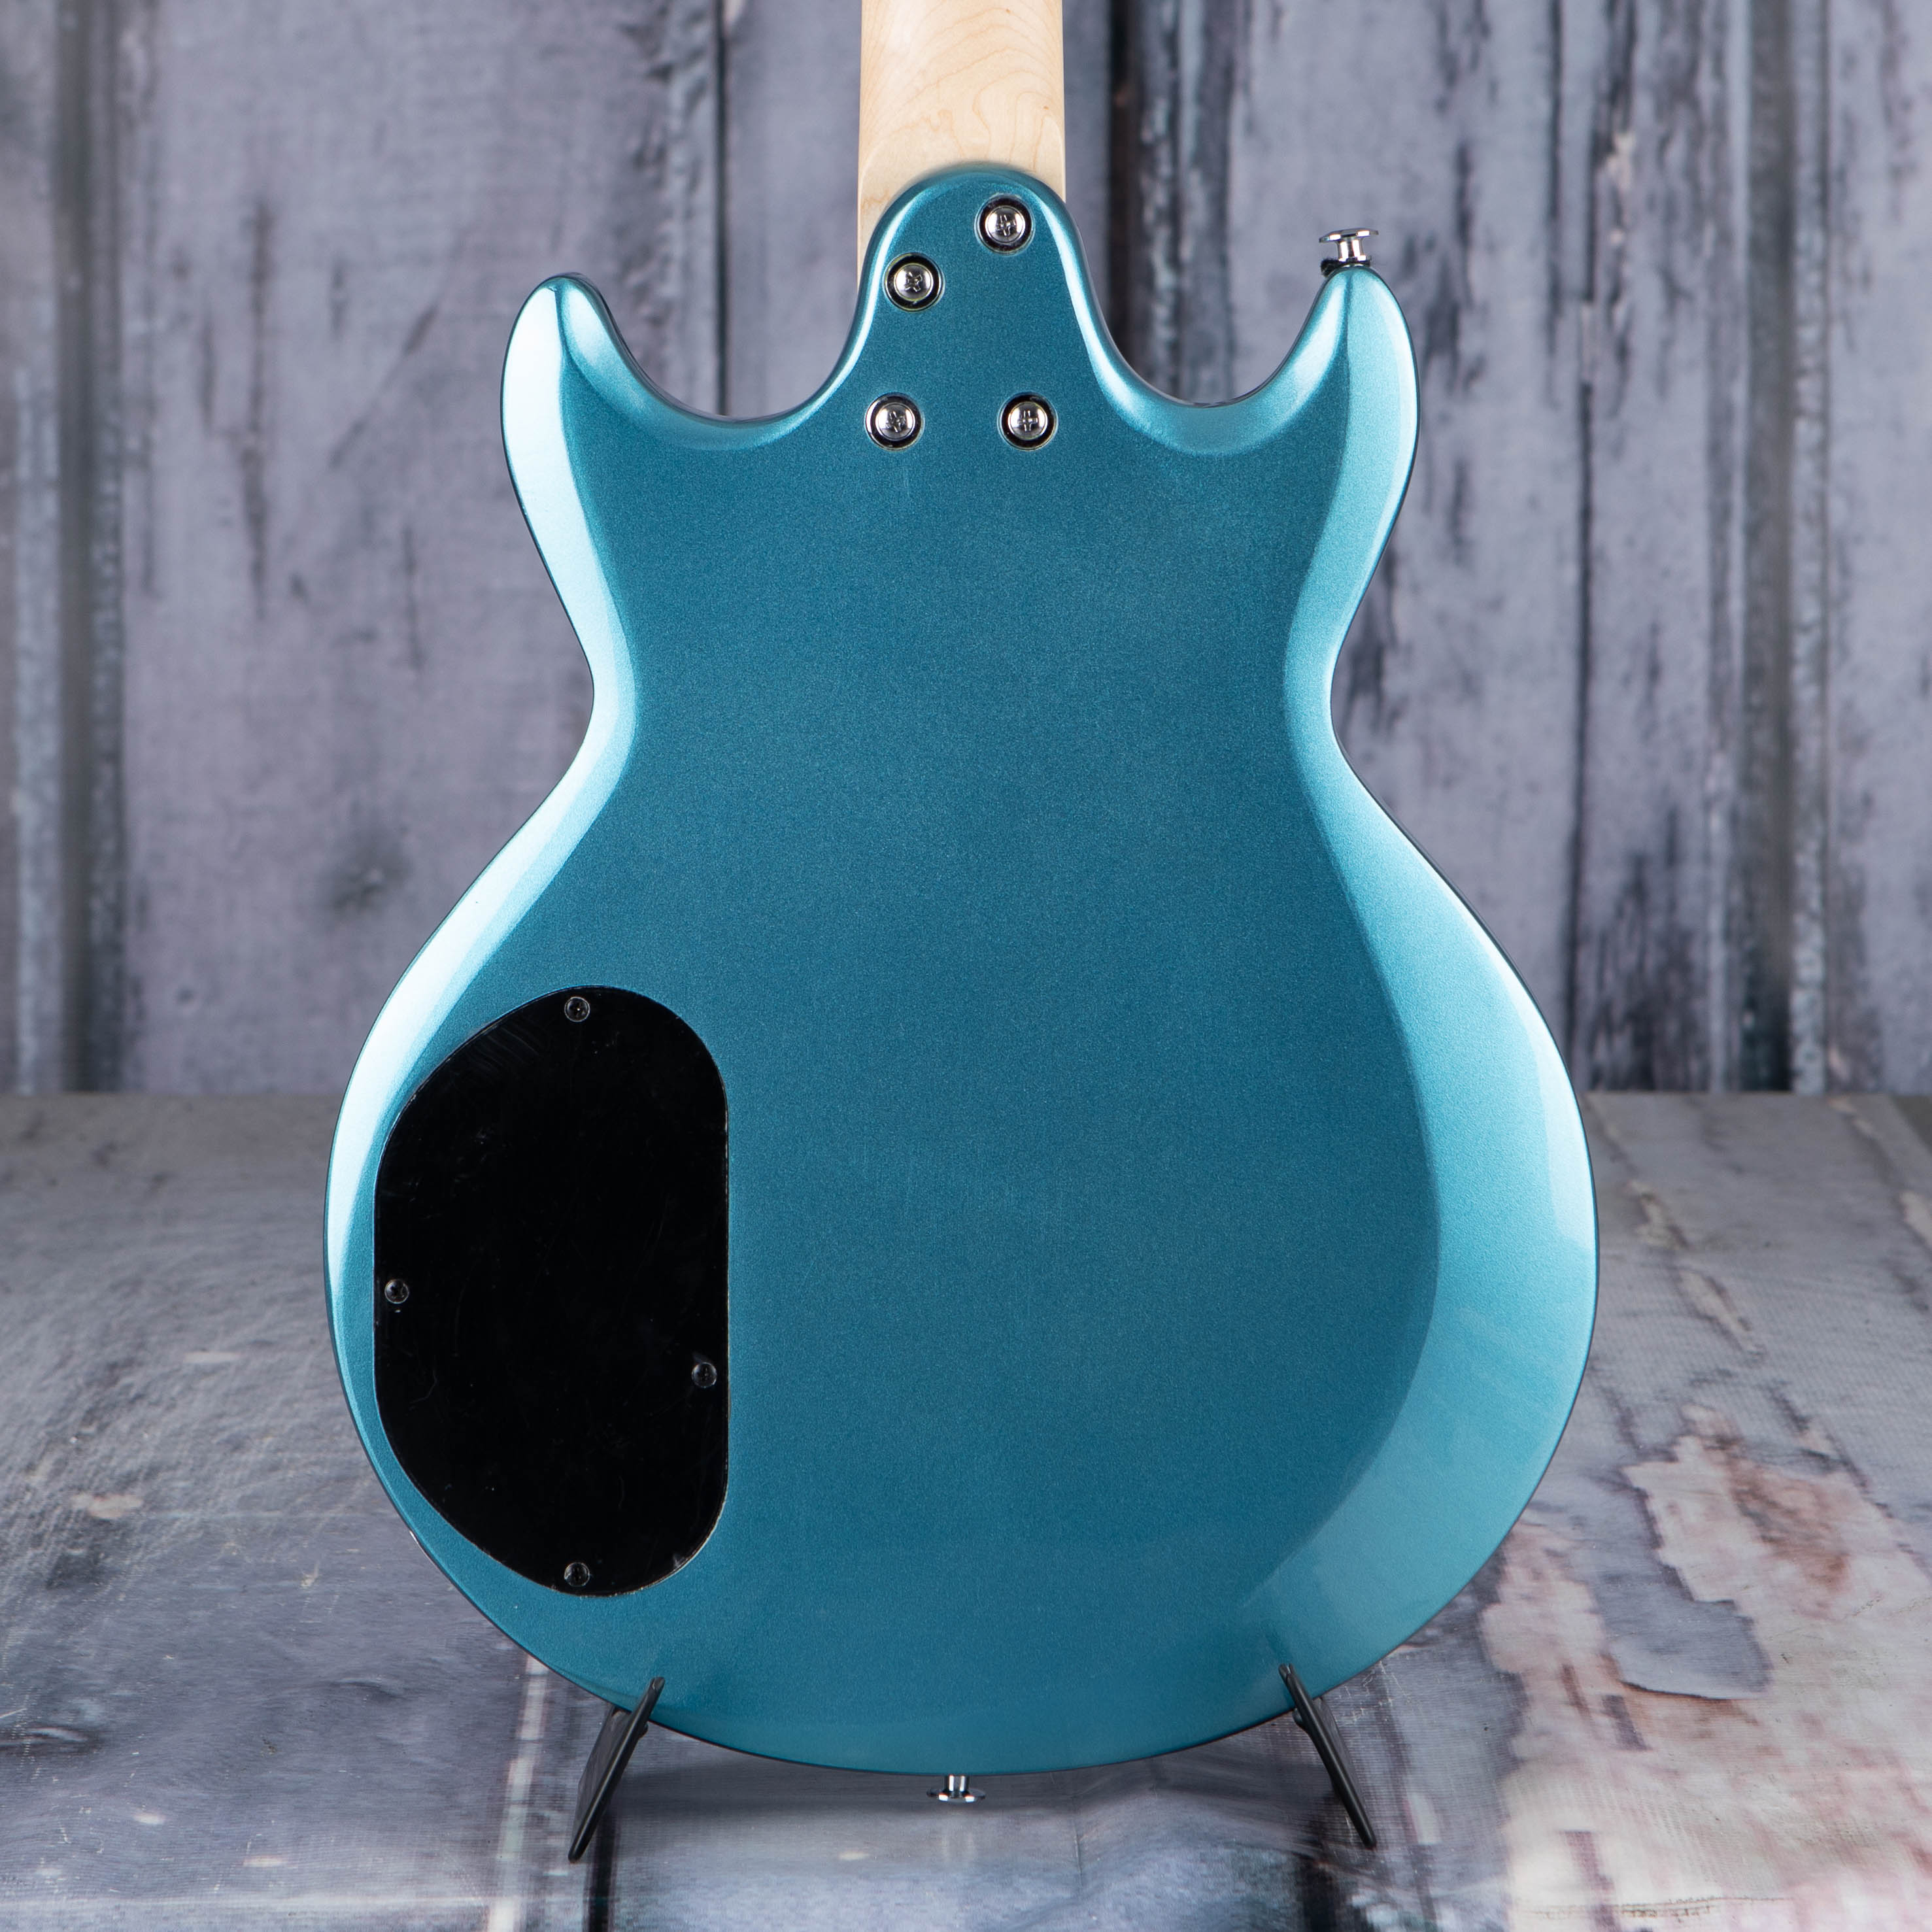 Ibanez AX120 Electric Guitar, Metallic Light Blue, back closeup